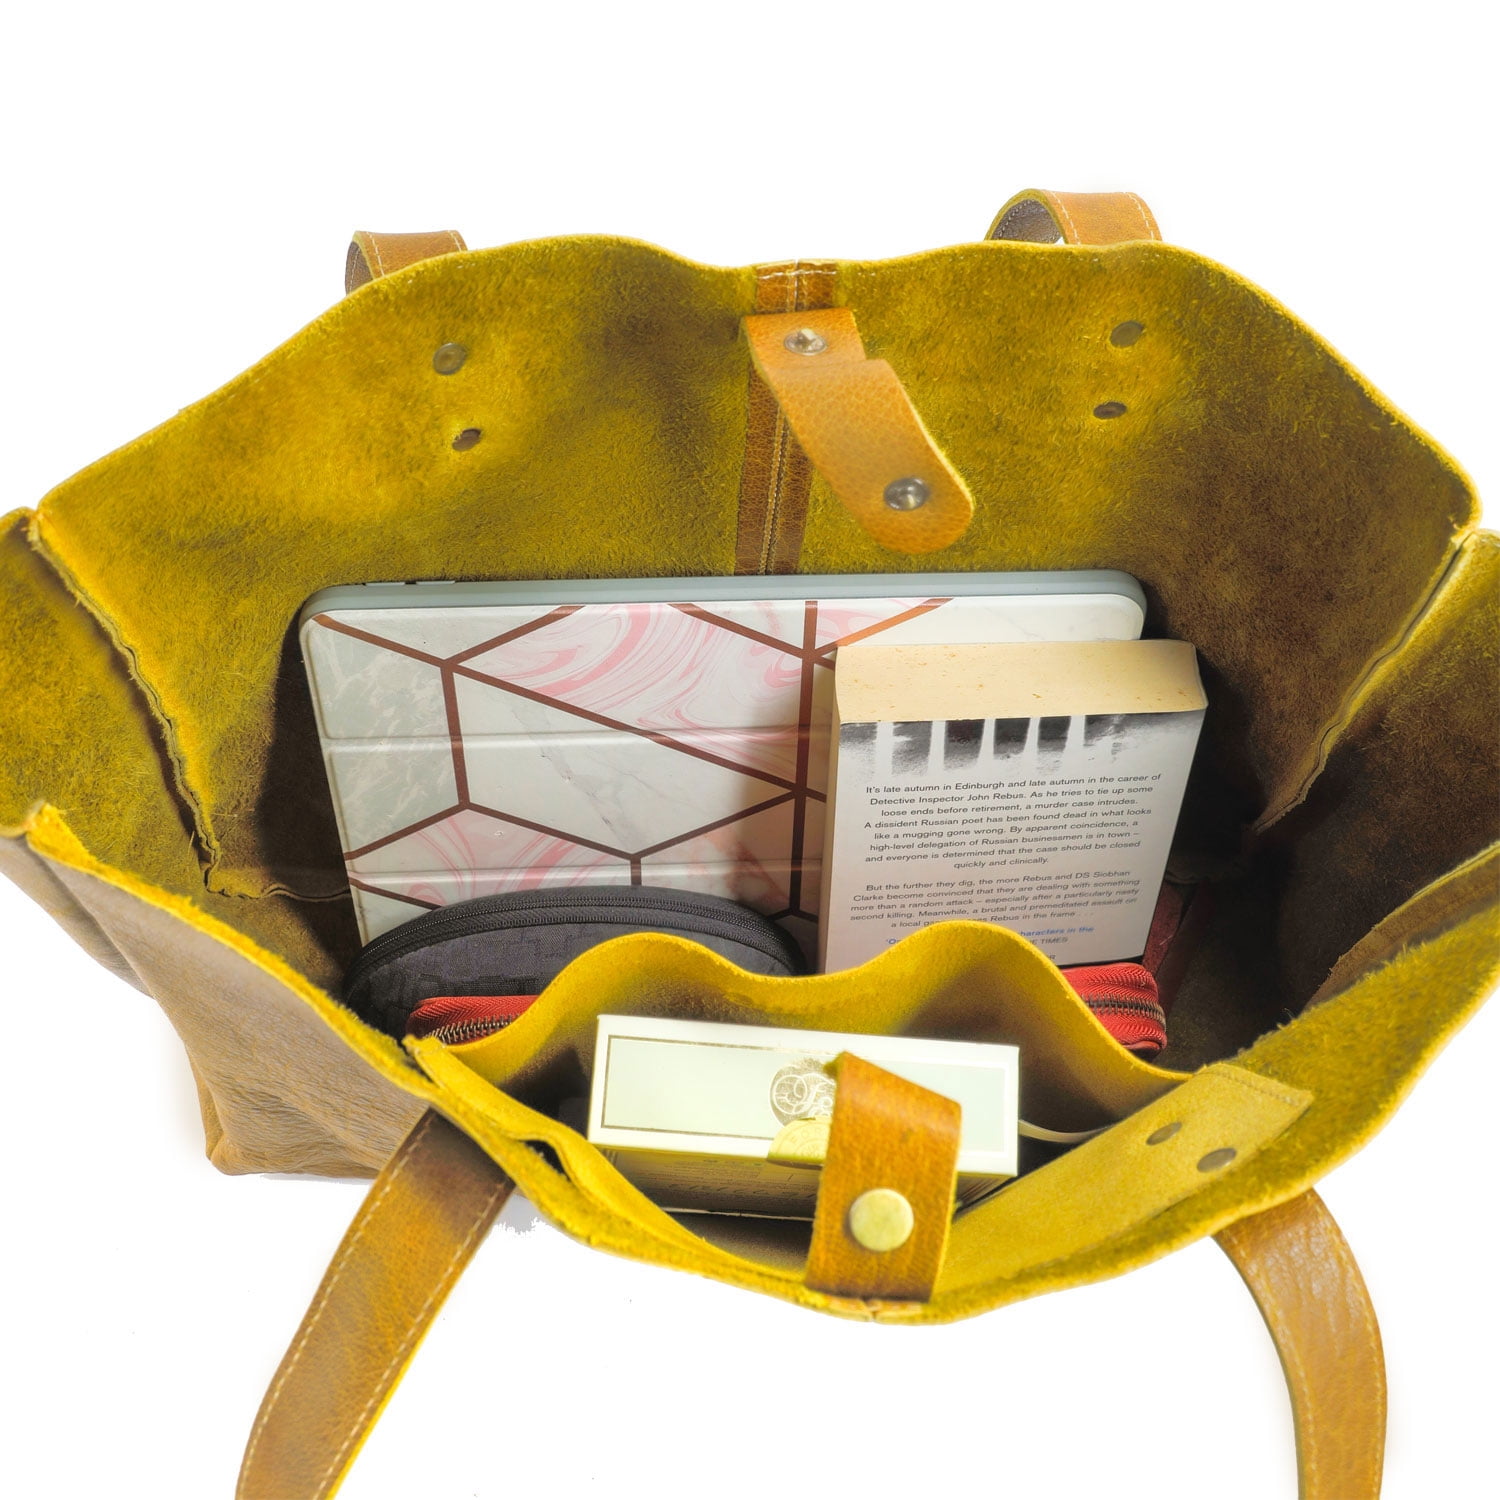 KomalC Leather Women's Tote bag/Ladies Purse/Travel Shopping Bag Hobo Carry  Shoulder Bag Multipurpose Handbag (Tan)